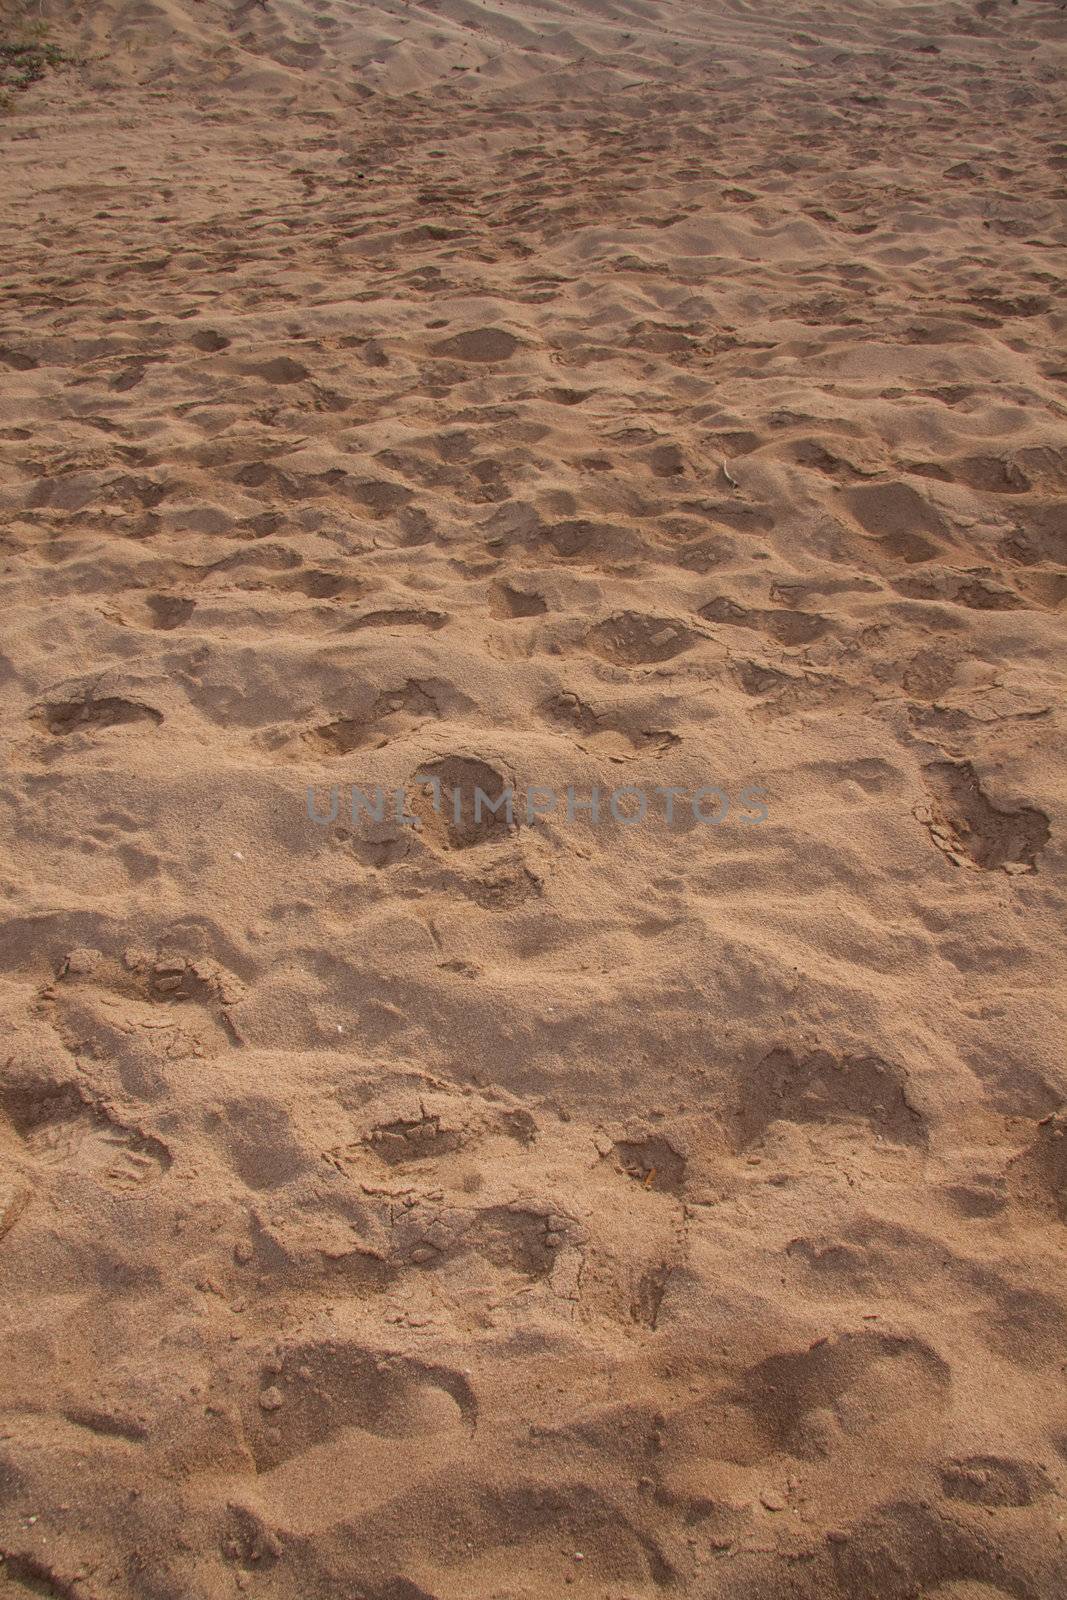 Sand Footprints by joshuaraineyphotography